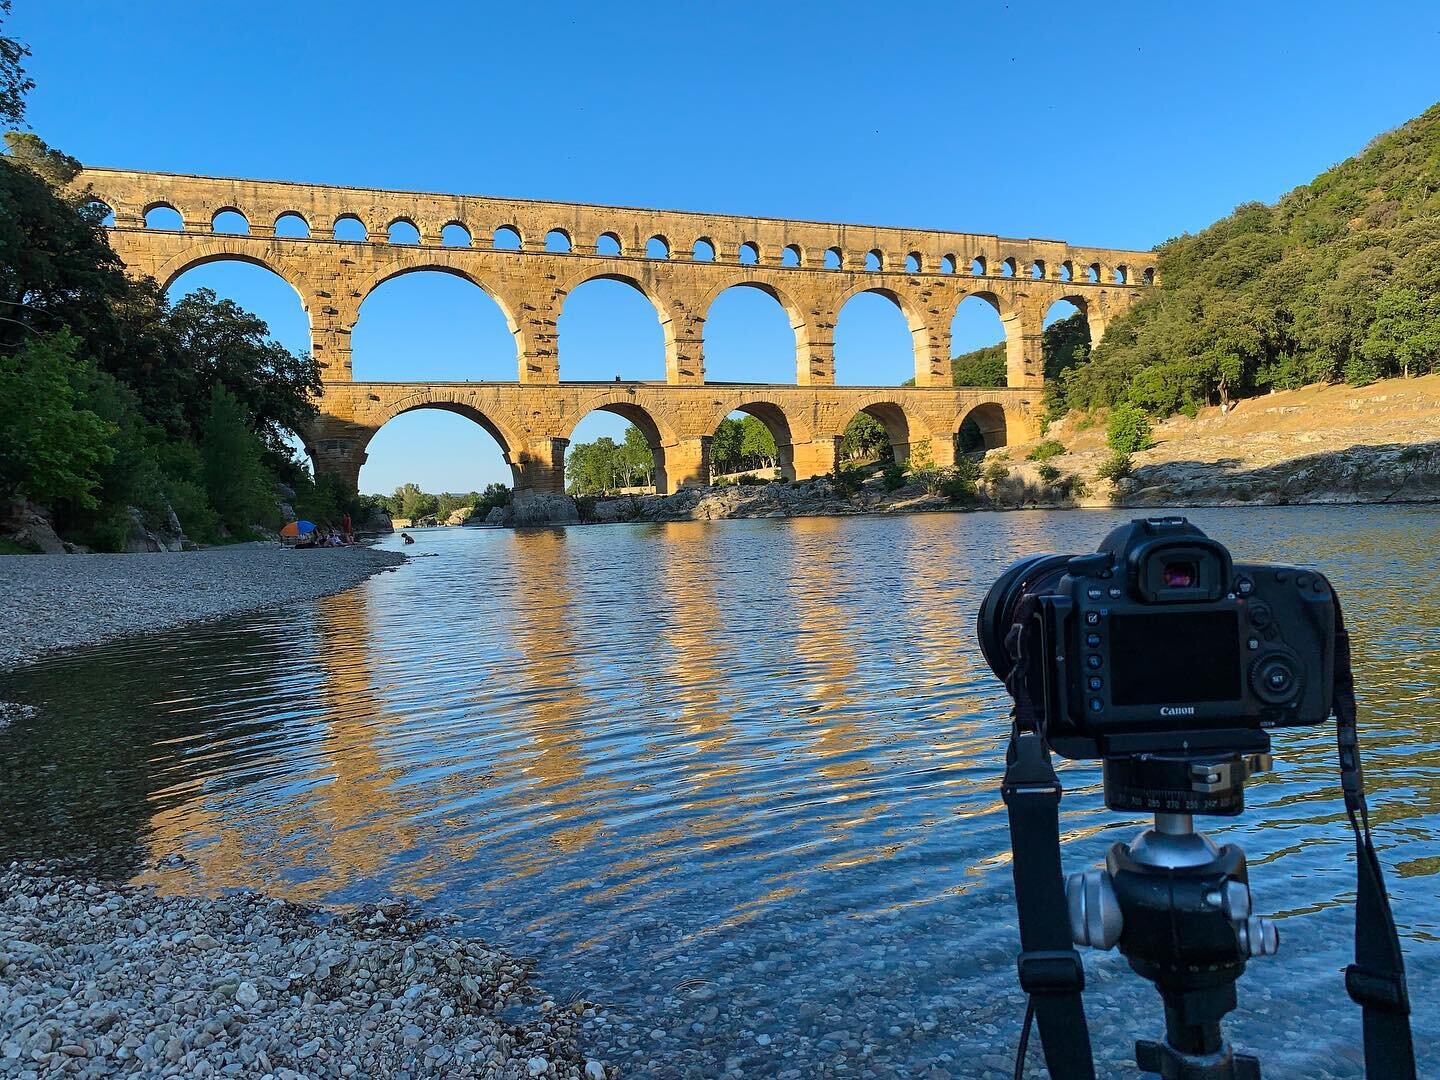 Pont du Gard at sunset, made it just in time! #instadaily #artofvisuals #aov #expatlife #expatgenius #travelphotography #france #travelgram #instamood #moodygrams #europe #agameoftones #ruins #travel #nofilter #pontdugard #southoffrance #sunset